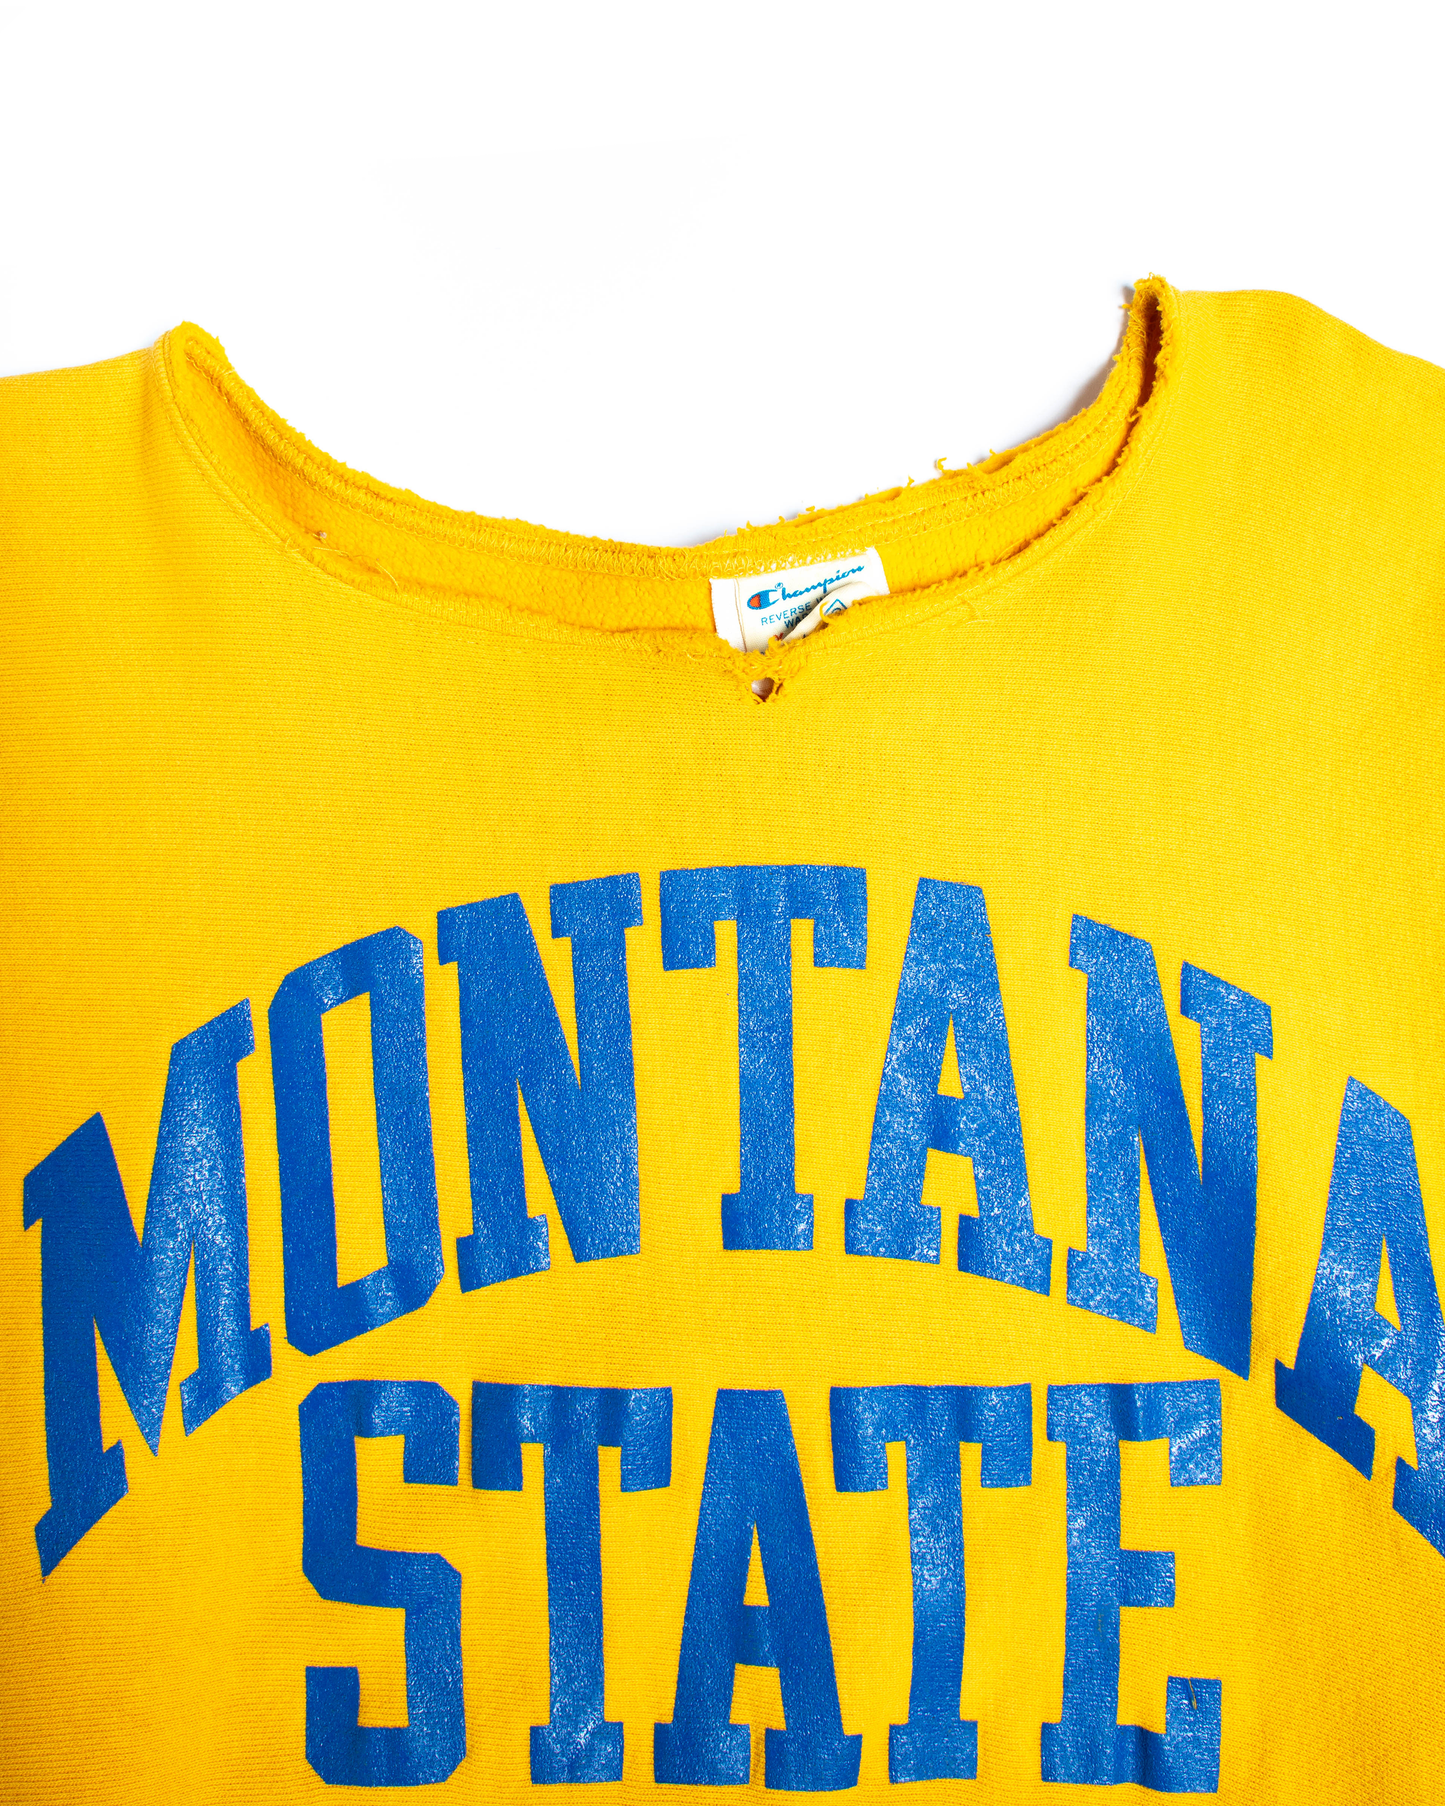 1980's Montana State Sweatshirt (Champion RW)